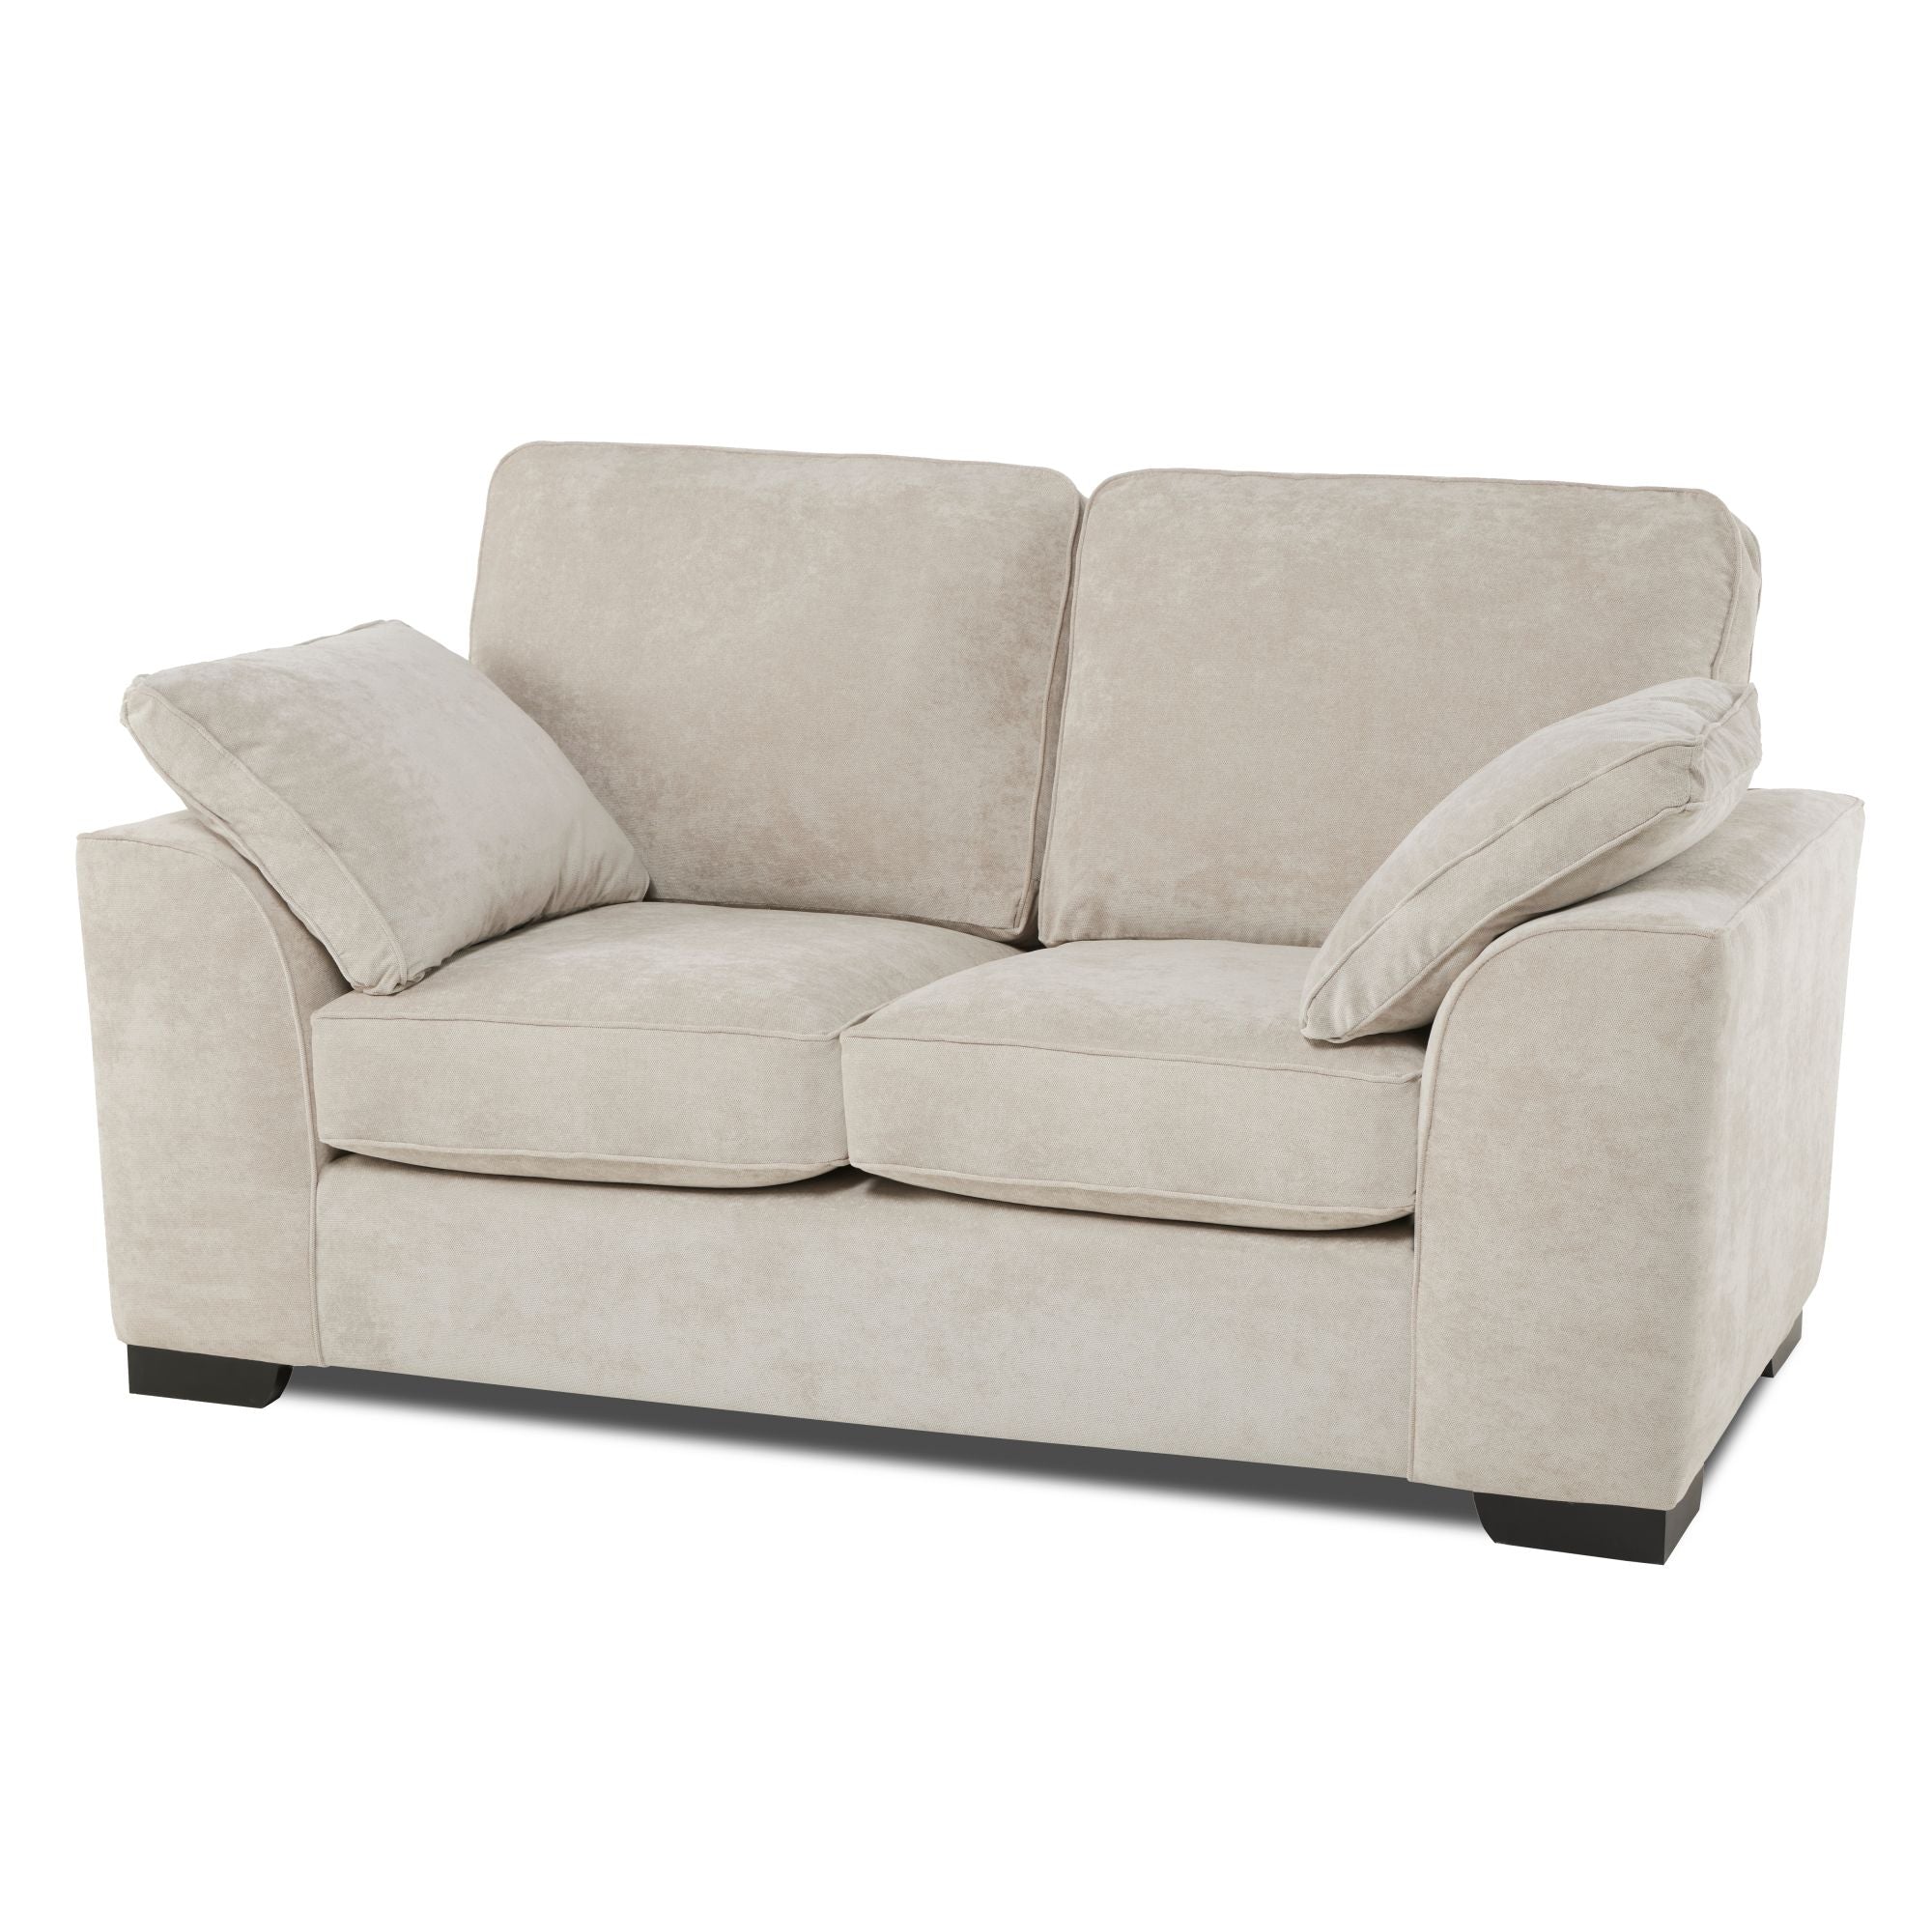 Lawson 2 Seater Sofa